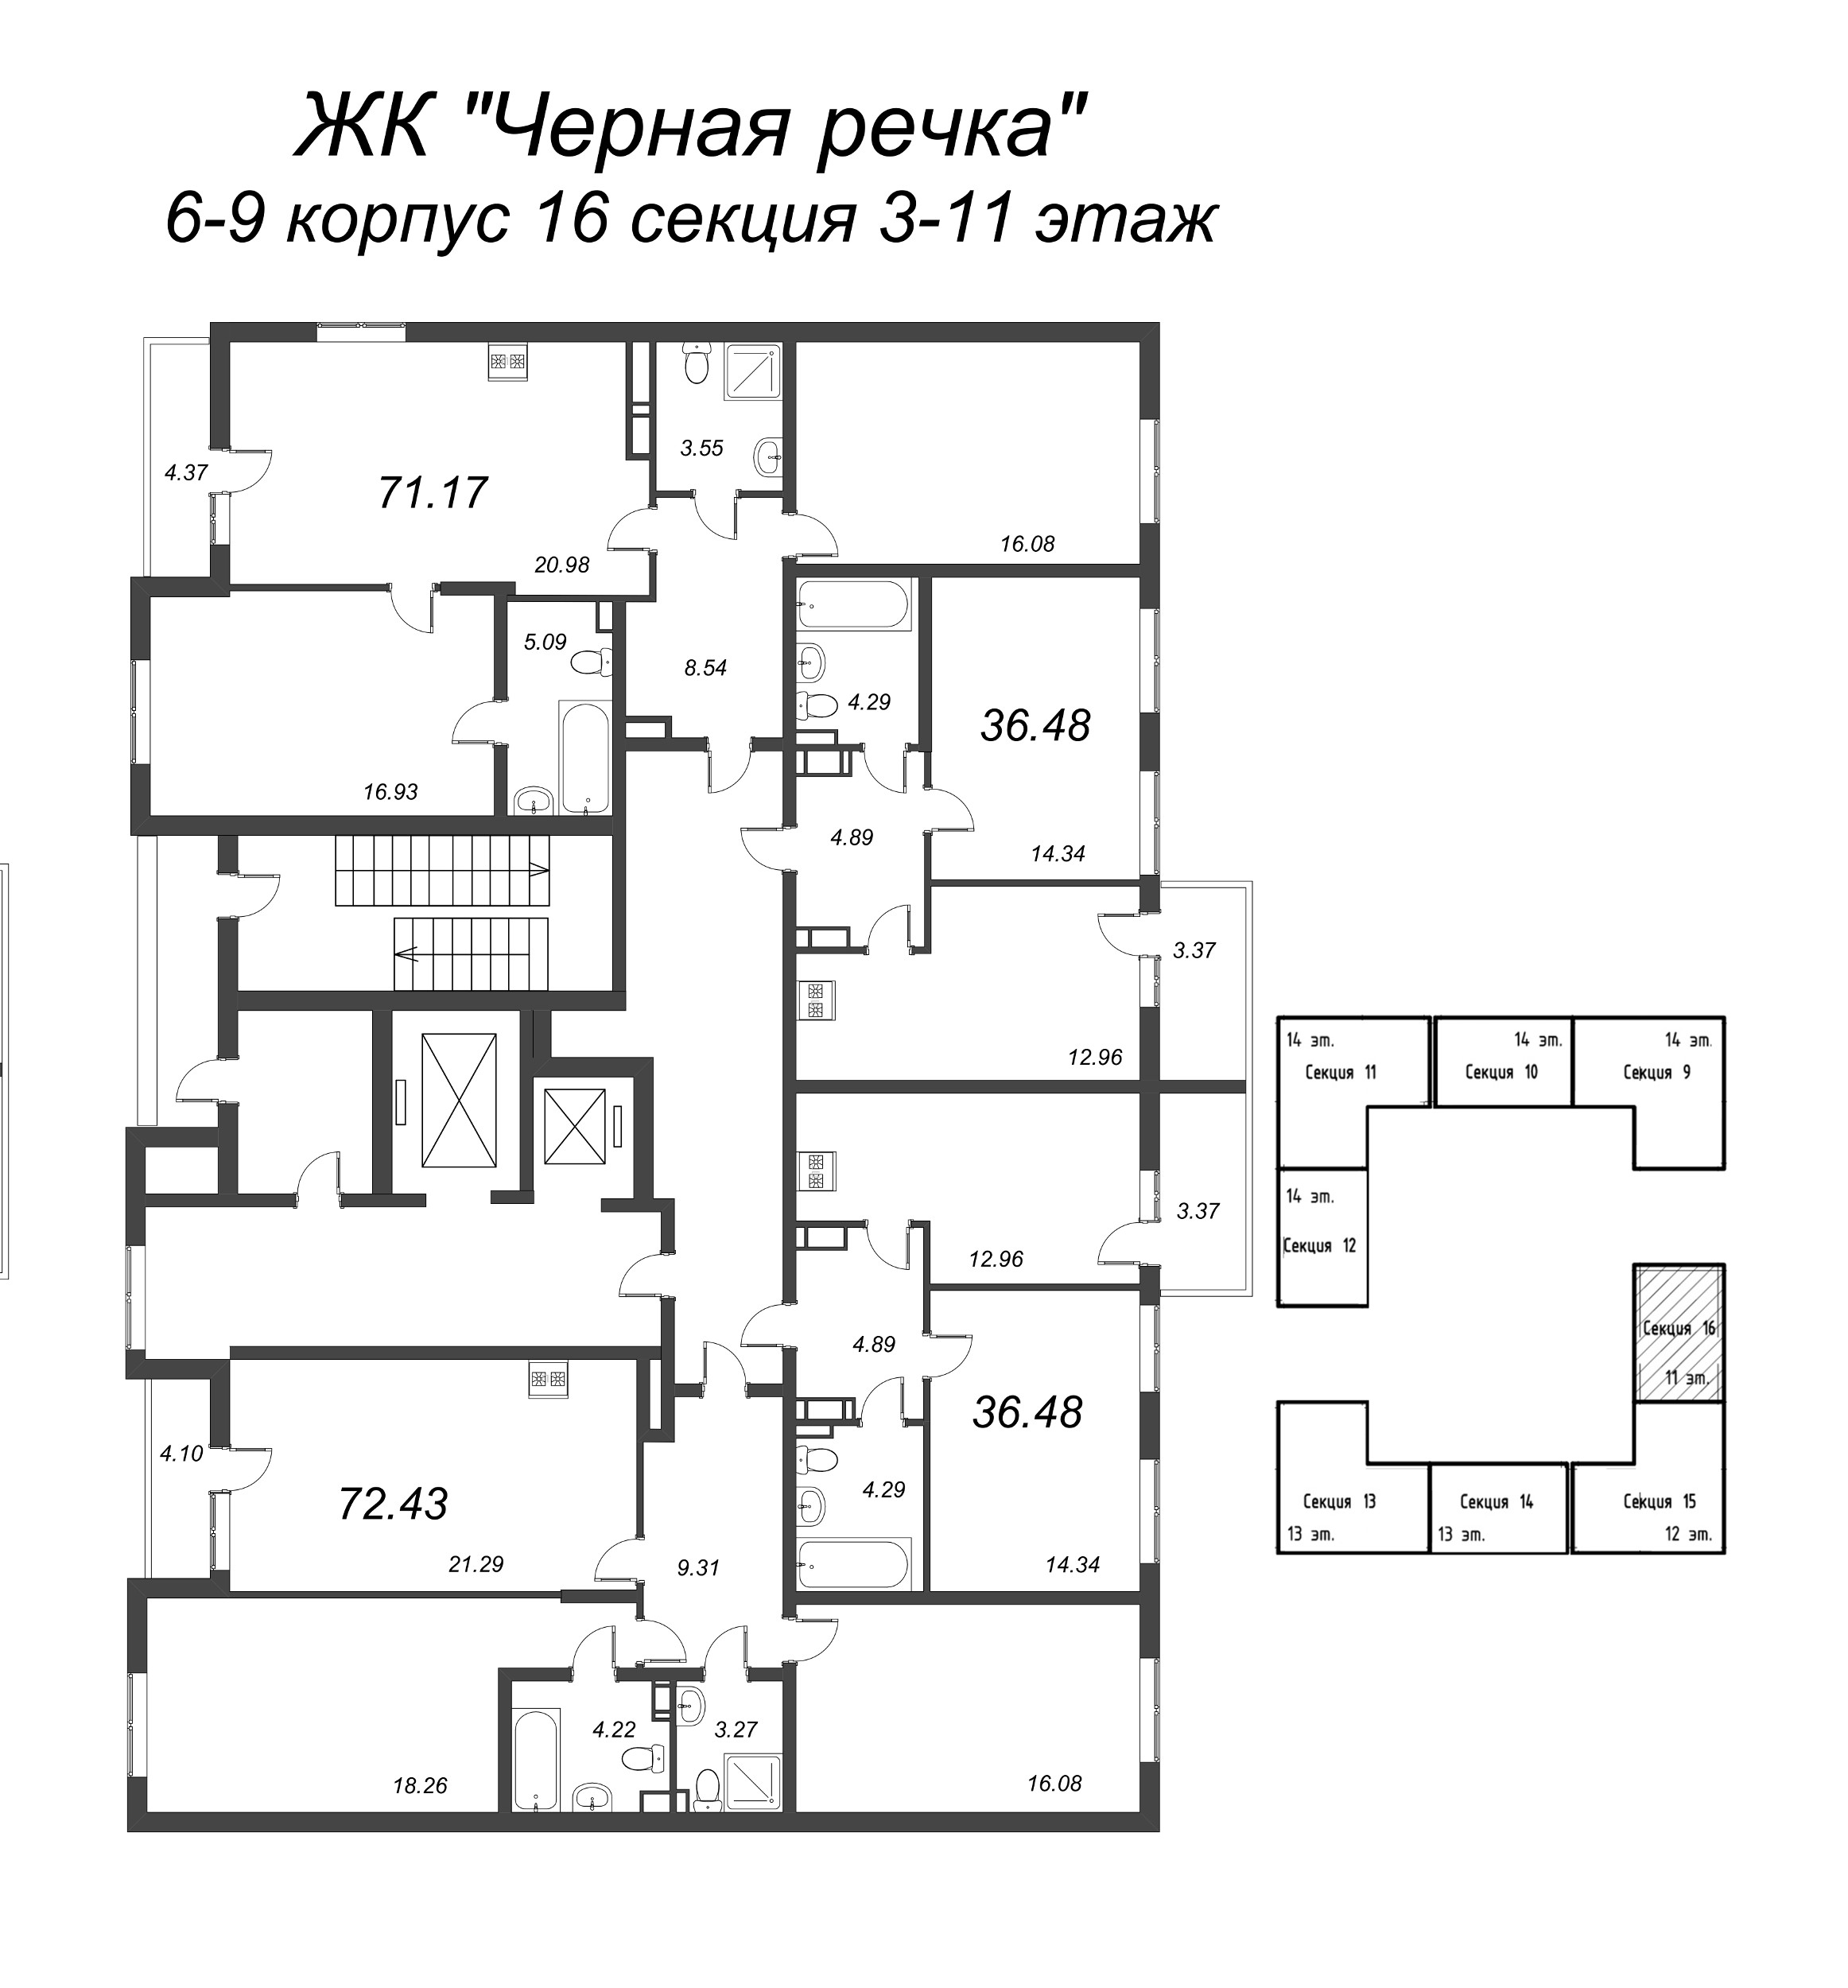 3-комнатная (Евро) квартира, 72.43 м² в ЖК "Чёрная речка от Ильича" - планировка этажа